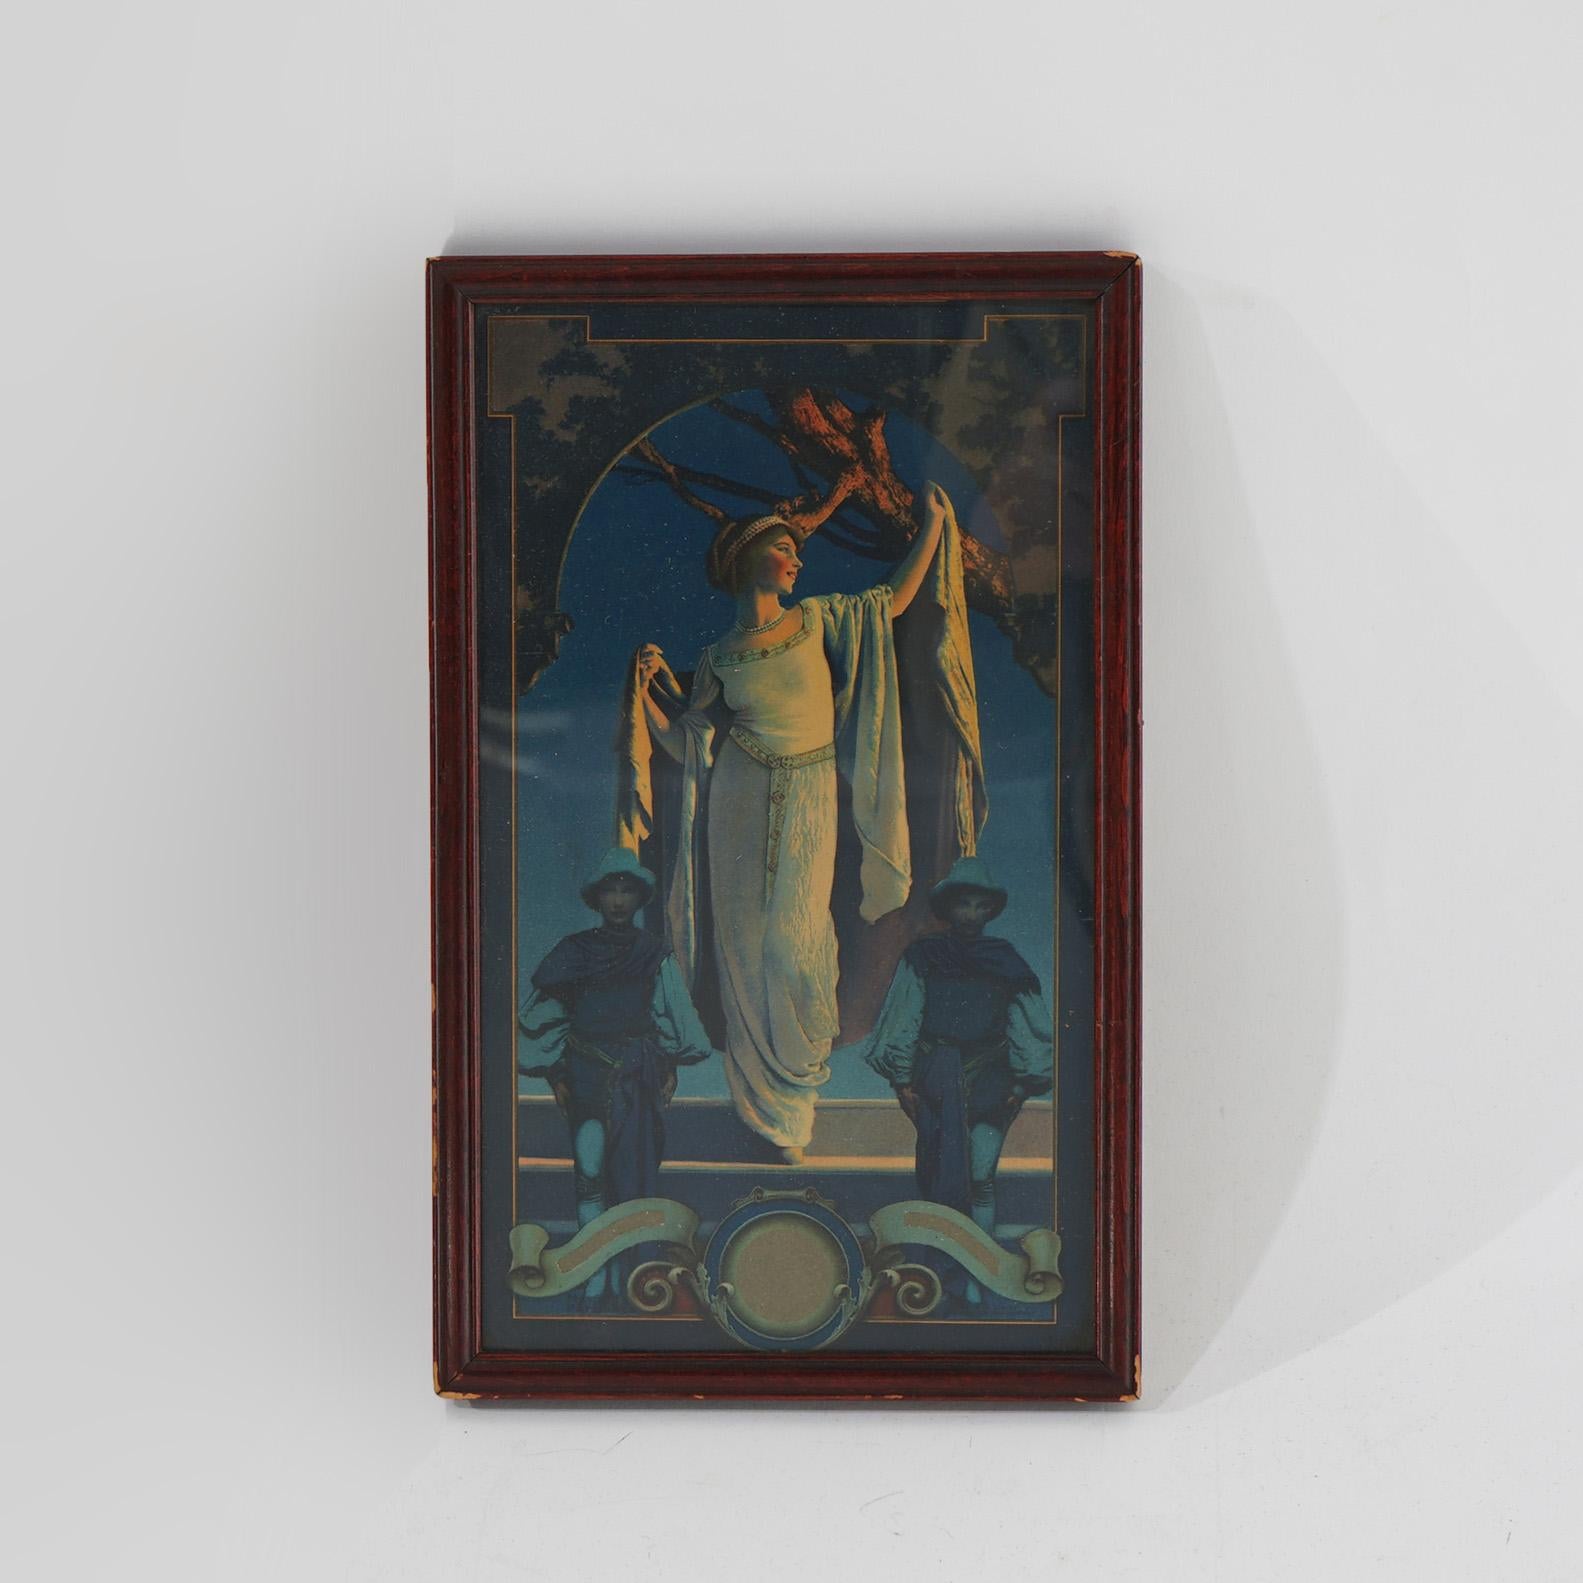 Antique Art Deco Maxfield Parrish Print Edison Mazda Calendar Top “Spirit Of The Night”, Framed, C1919

Measures - 12